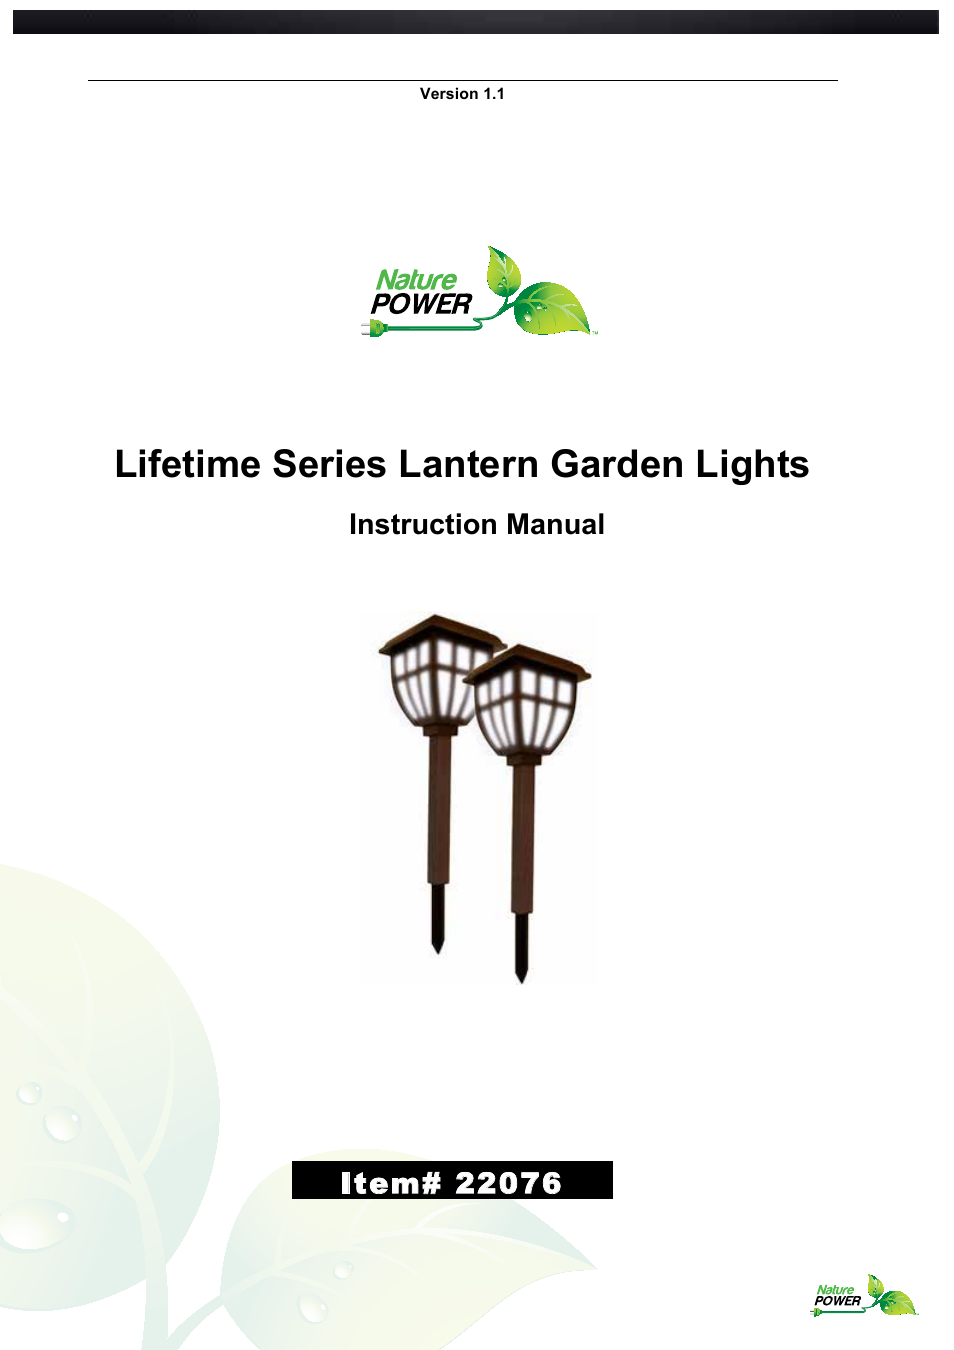 Lifetime Series Lantern Garden Lights (22076)